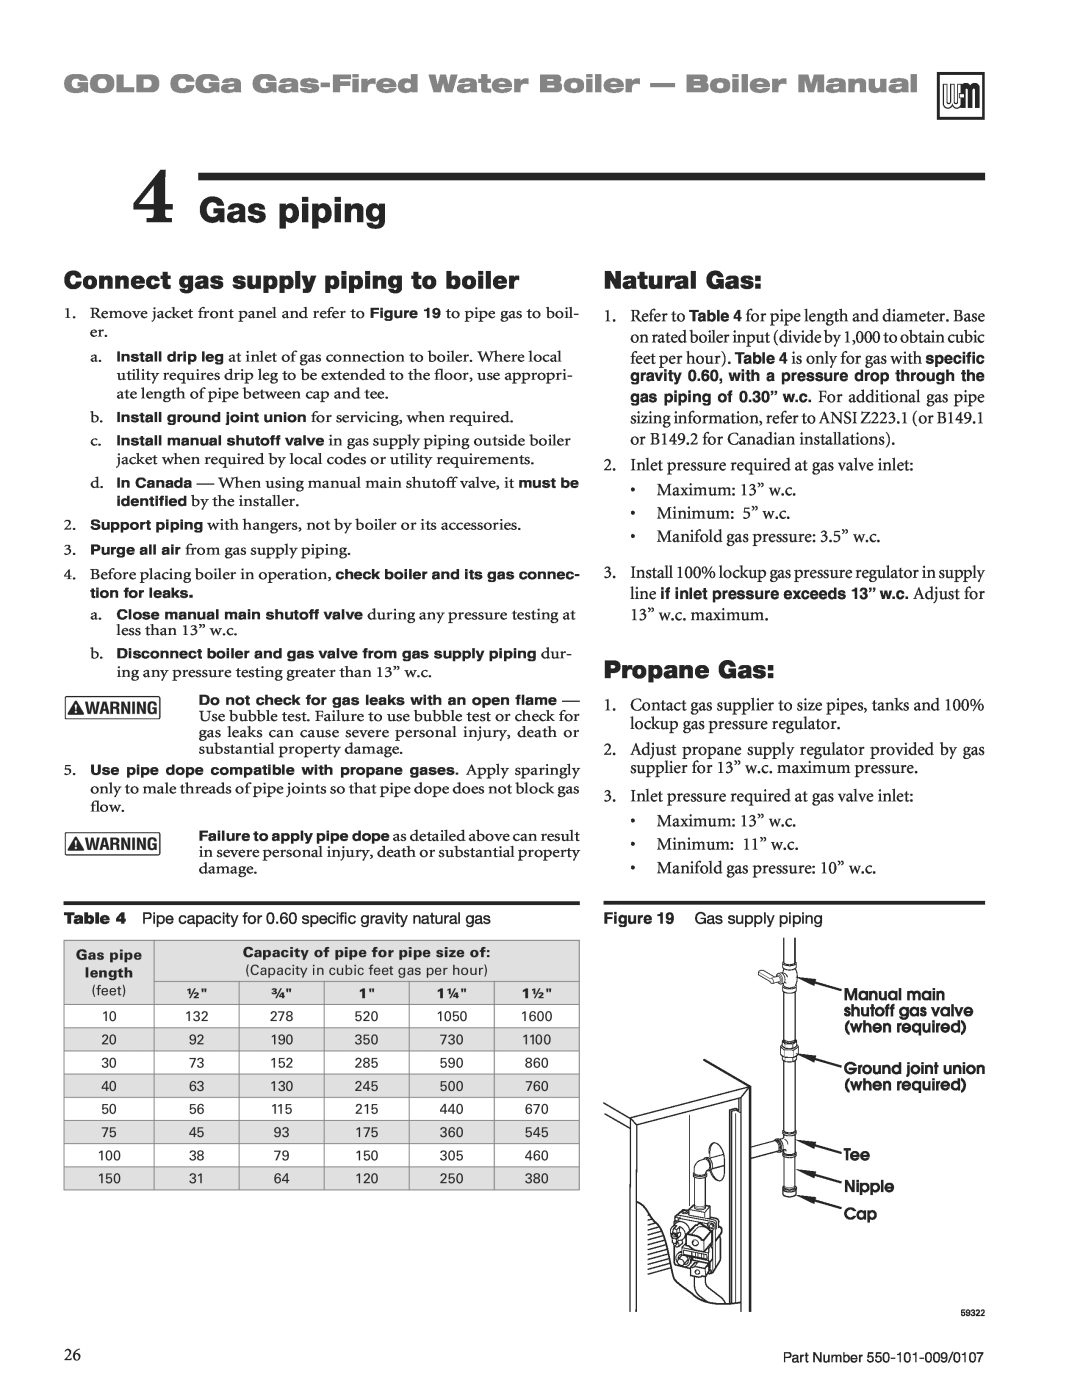 Weil-McLain CGA25SPDN 4Gas piping, GOLD CGa Gas-FiredWater Boiler - Boiler Manual, ss -ANIFOLDGAS PRESSURE vPWC 